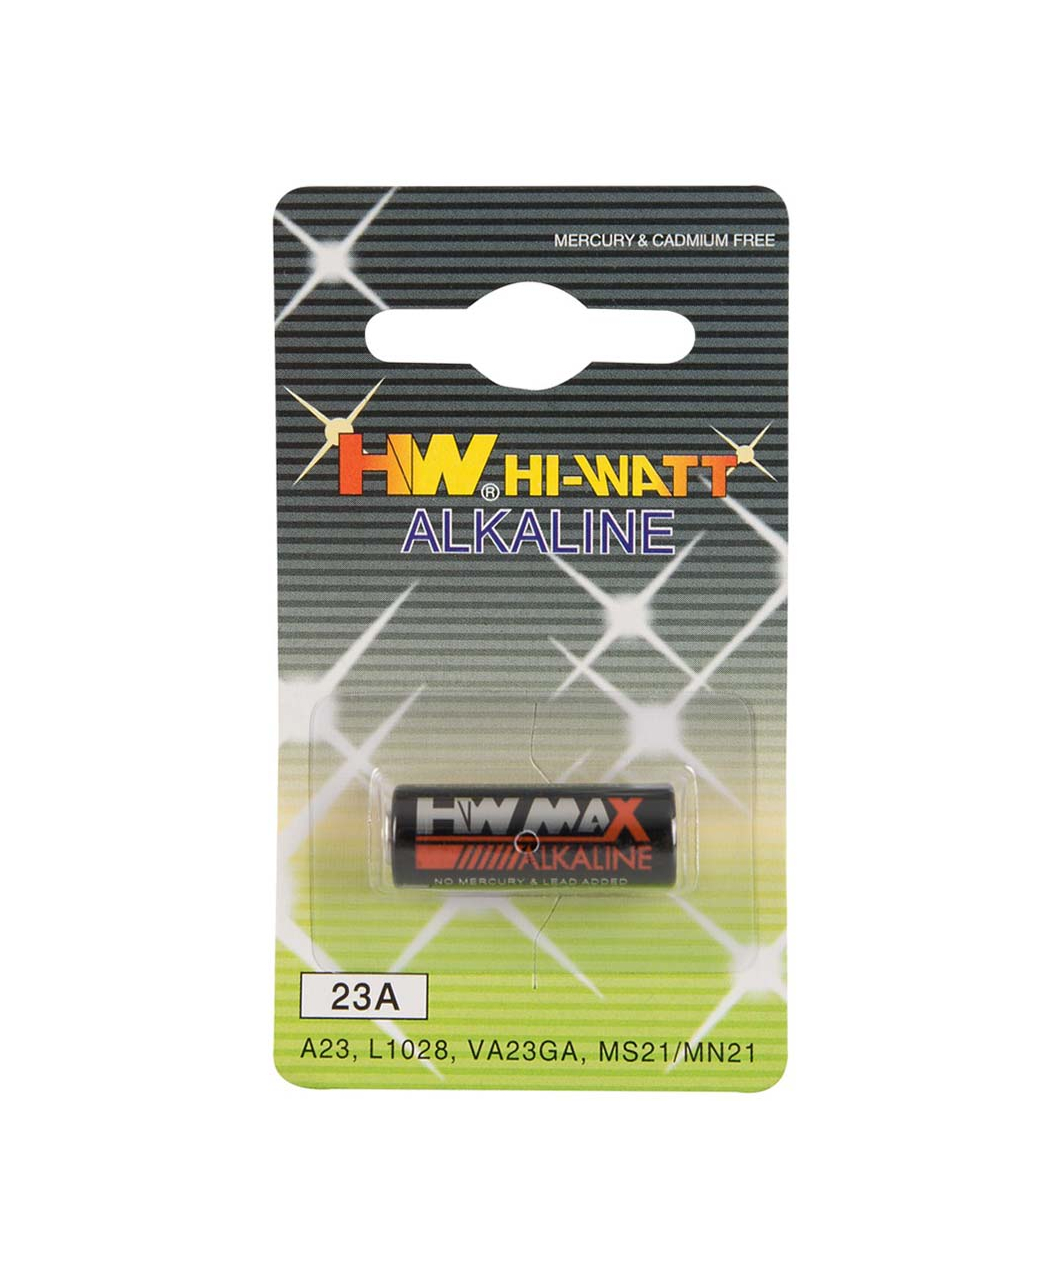 Hi-Watt 23A battery (1 pc)